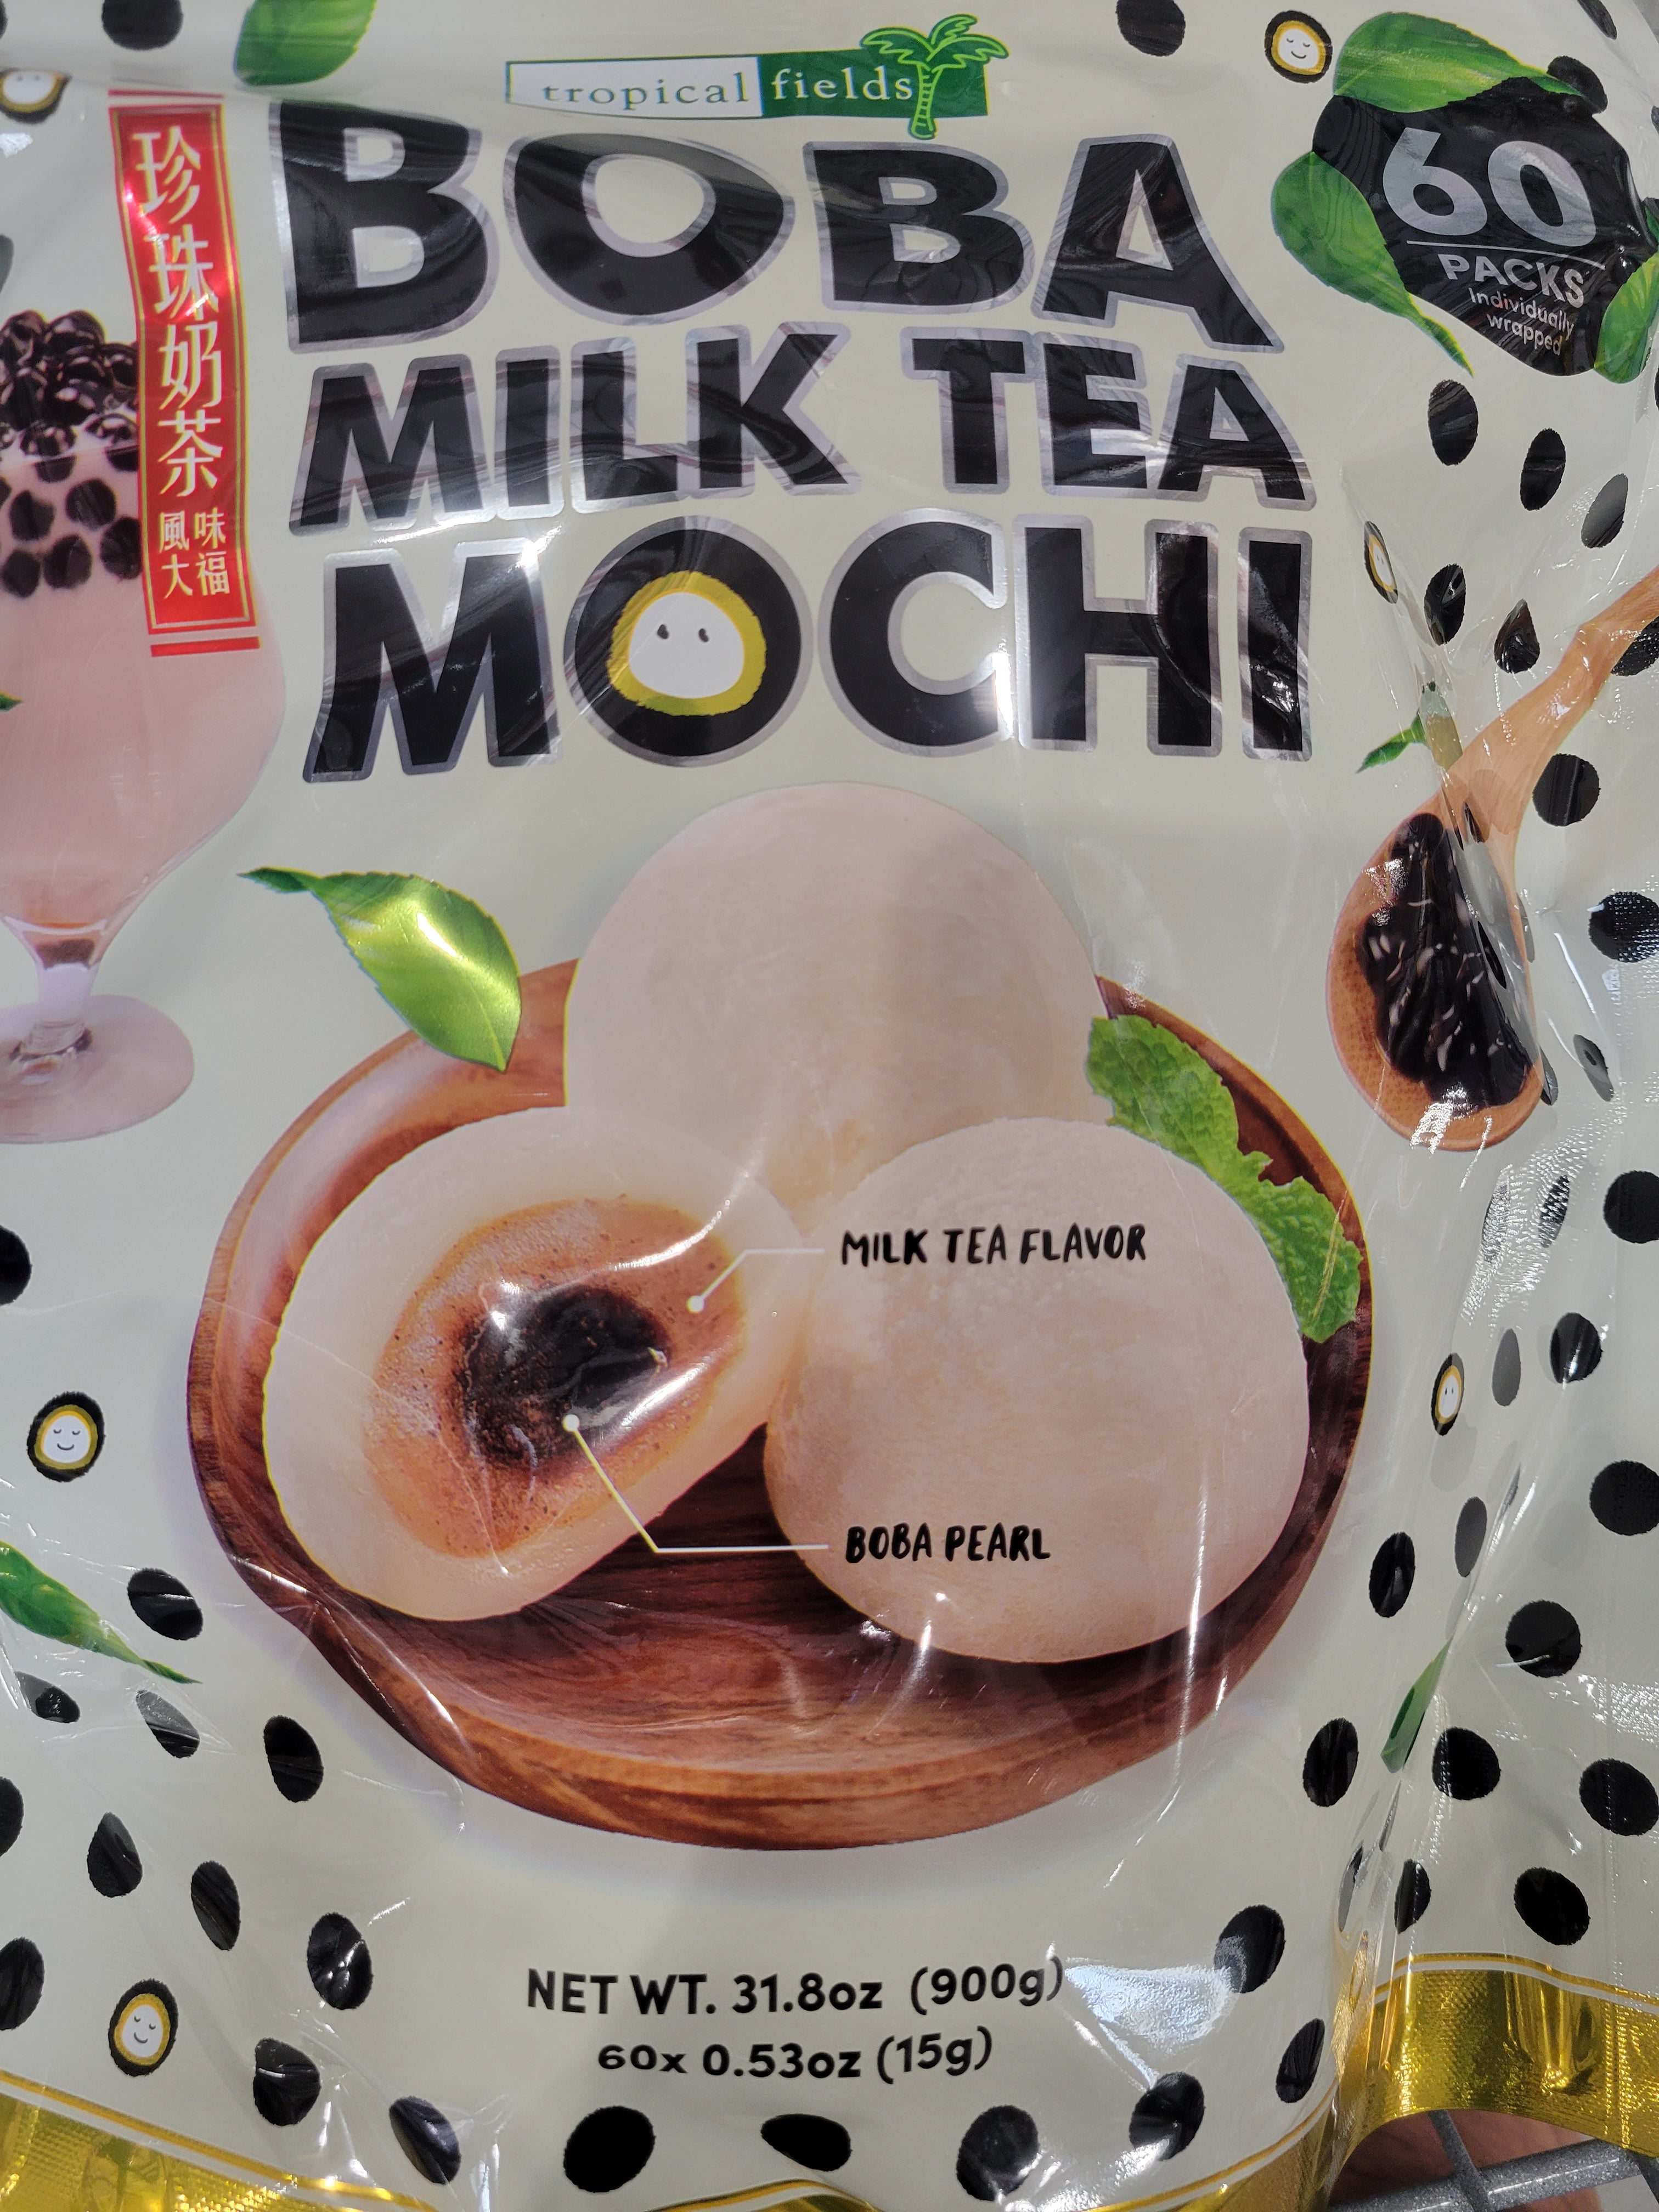 Boba Milk Tea Mochi snack (60 pc)